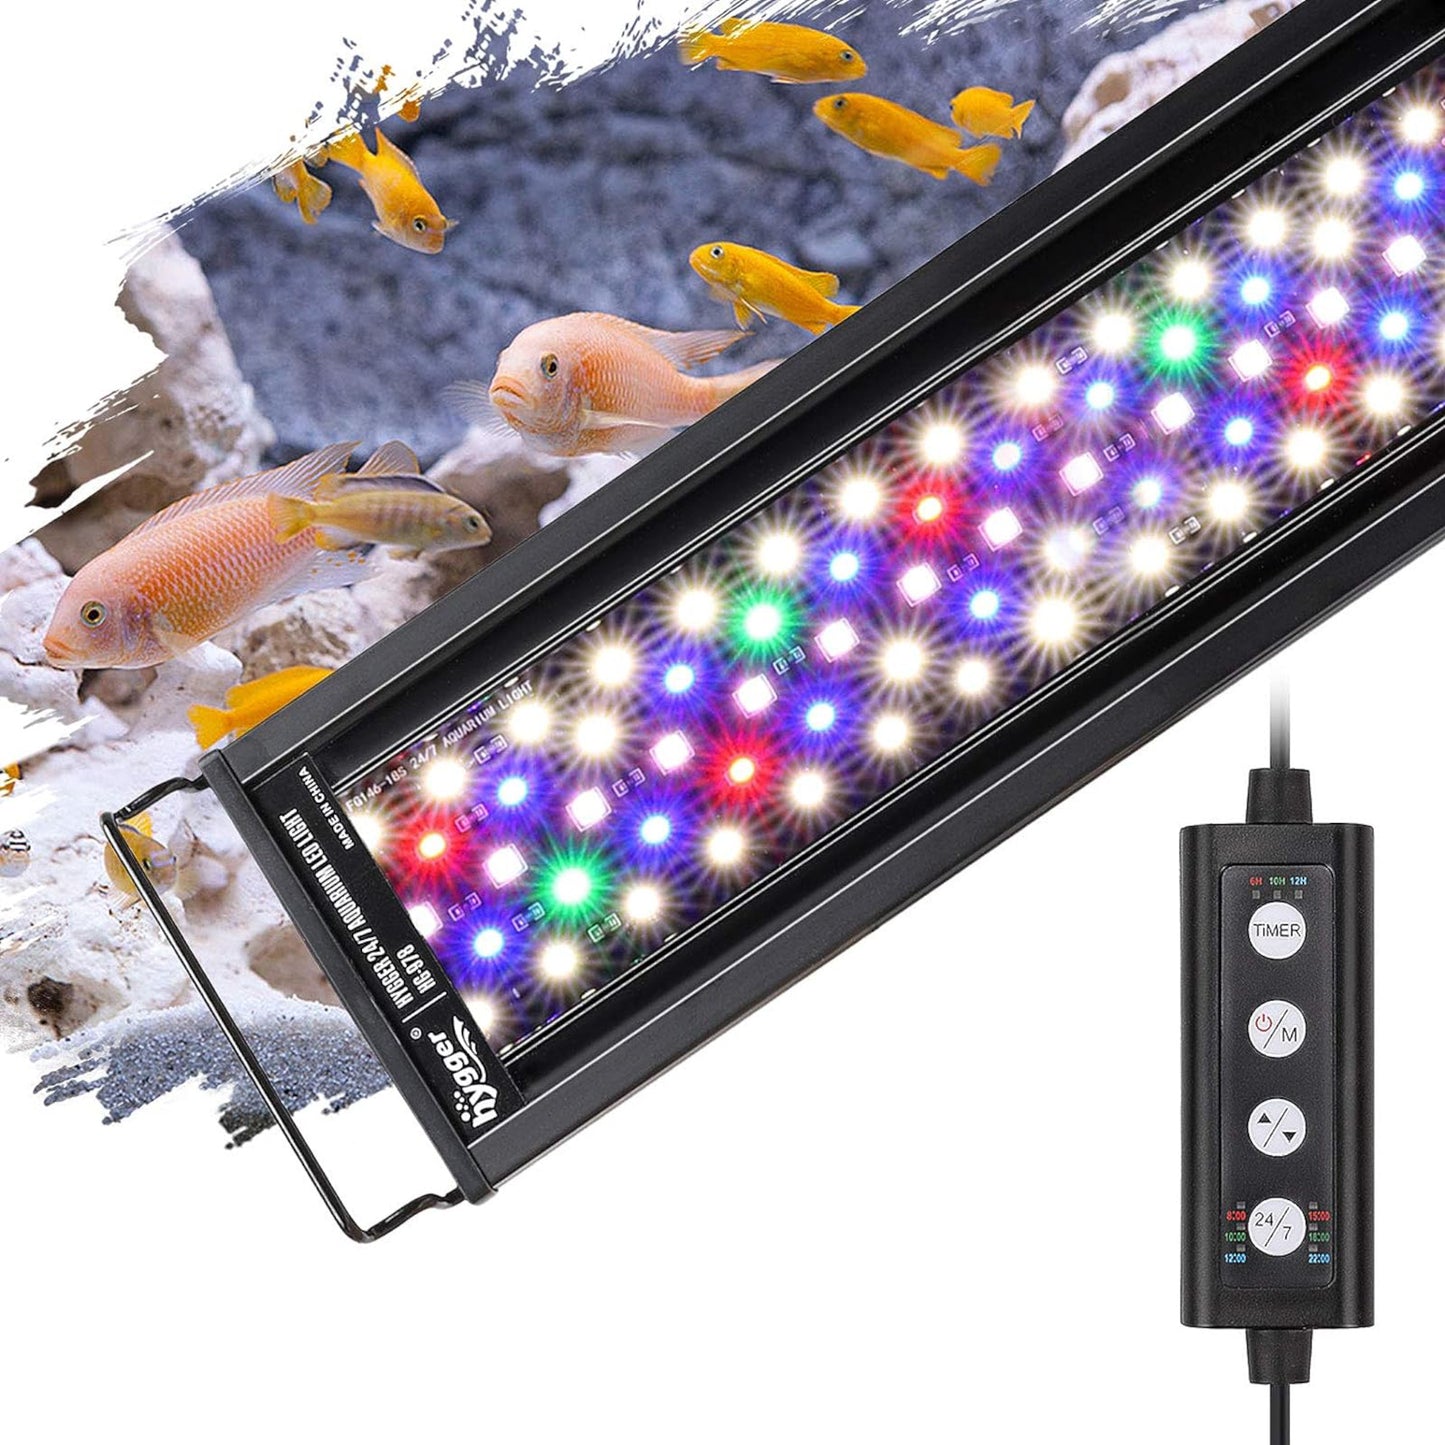 Hygger LED Fish Tank Lights 22W